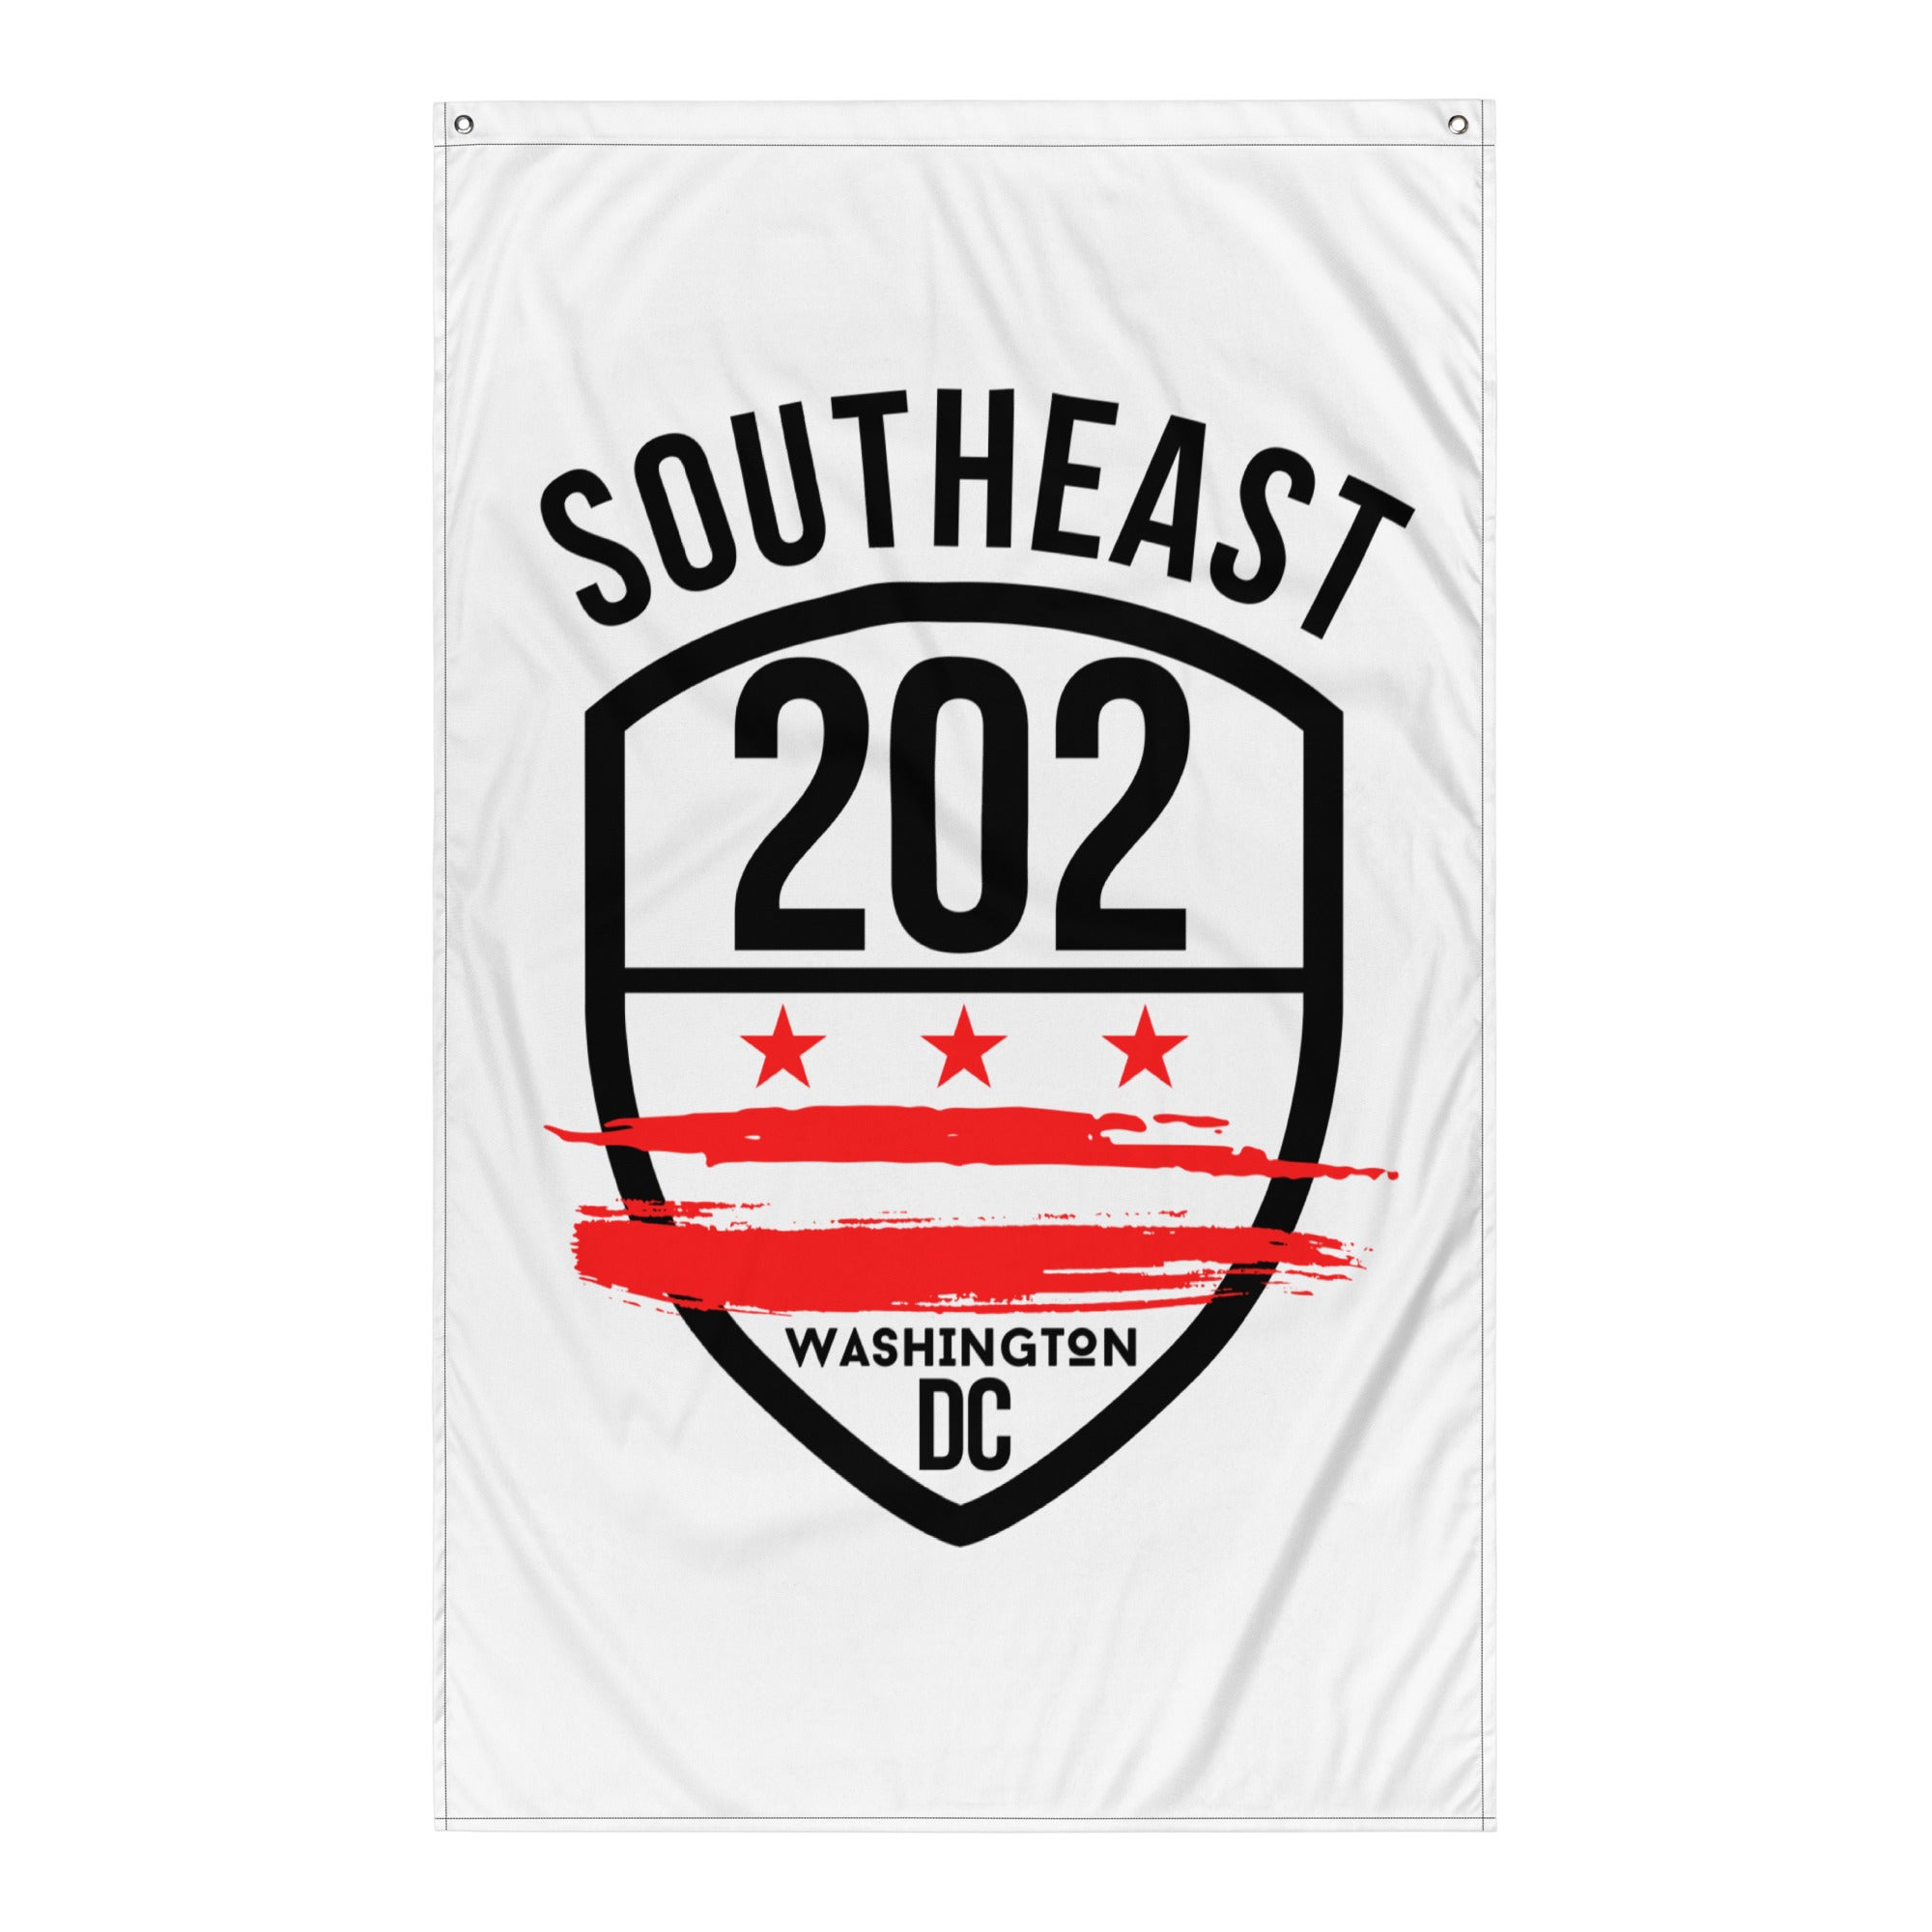 Southeast 202*/DC Emblem Flag